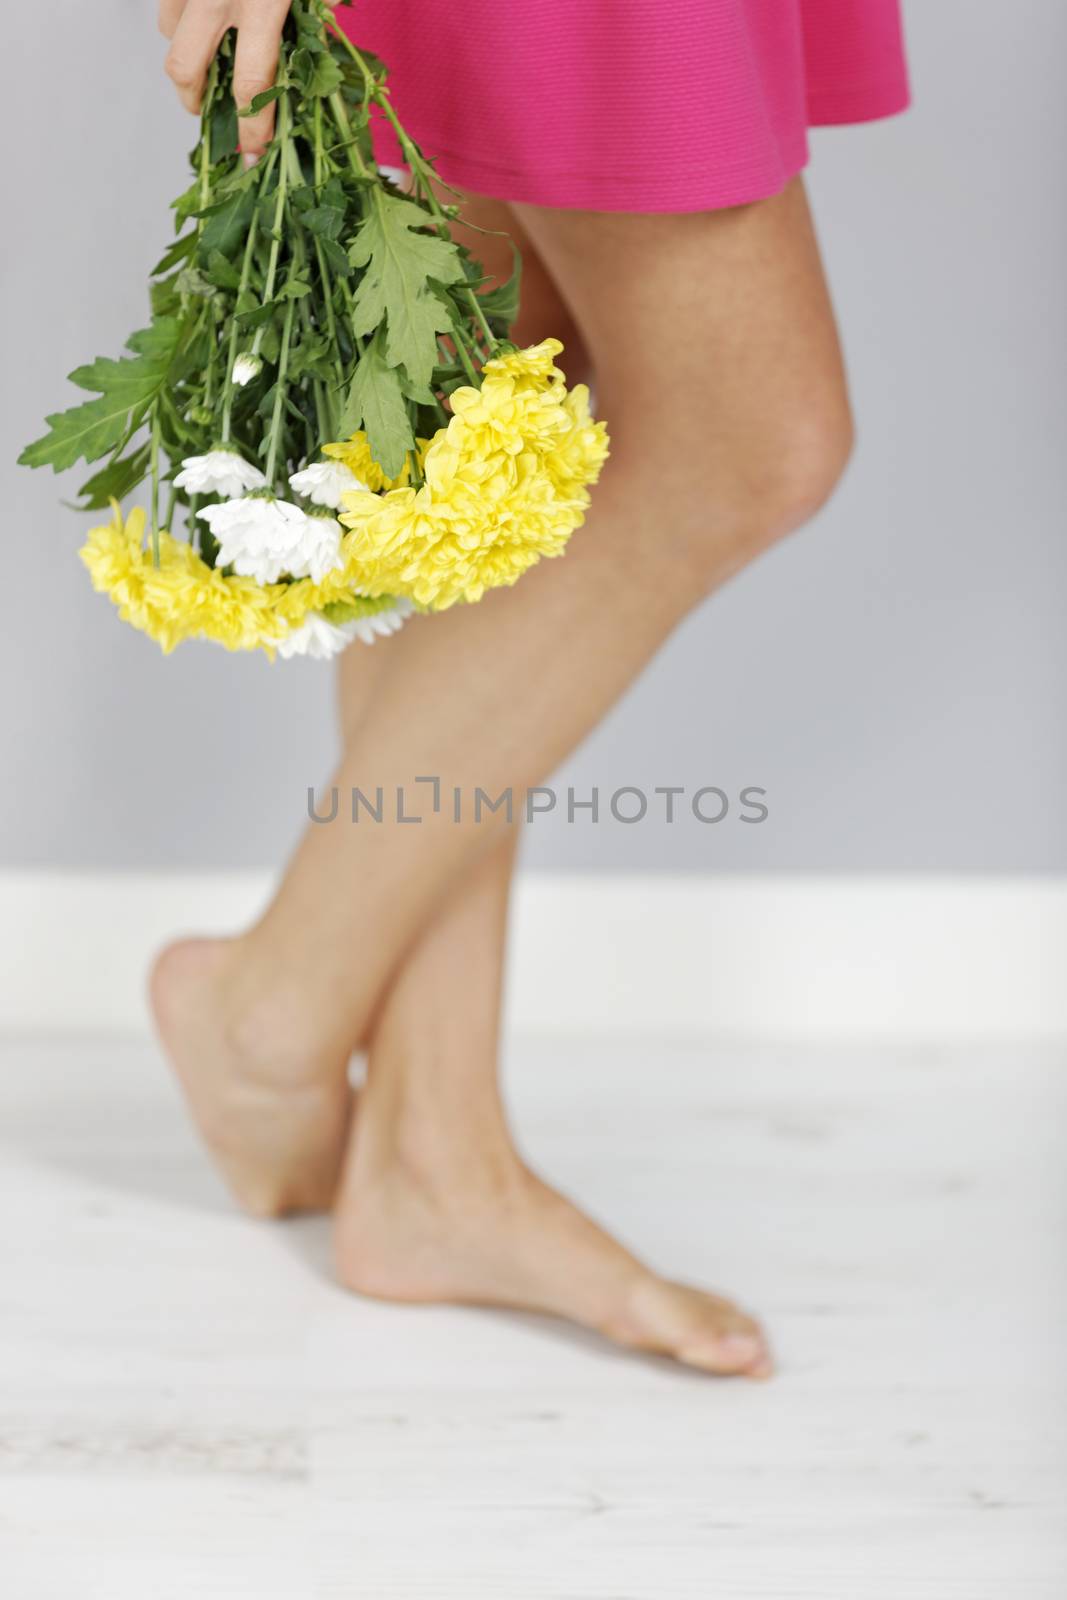 Flowers next to womans legs by studiofi